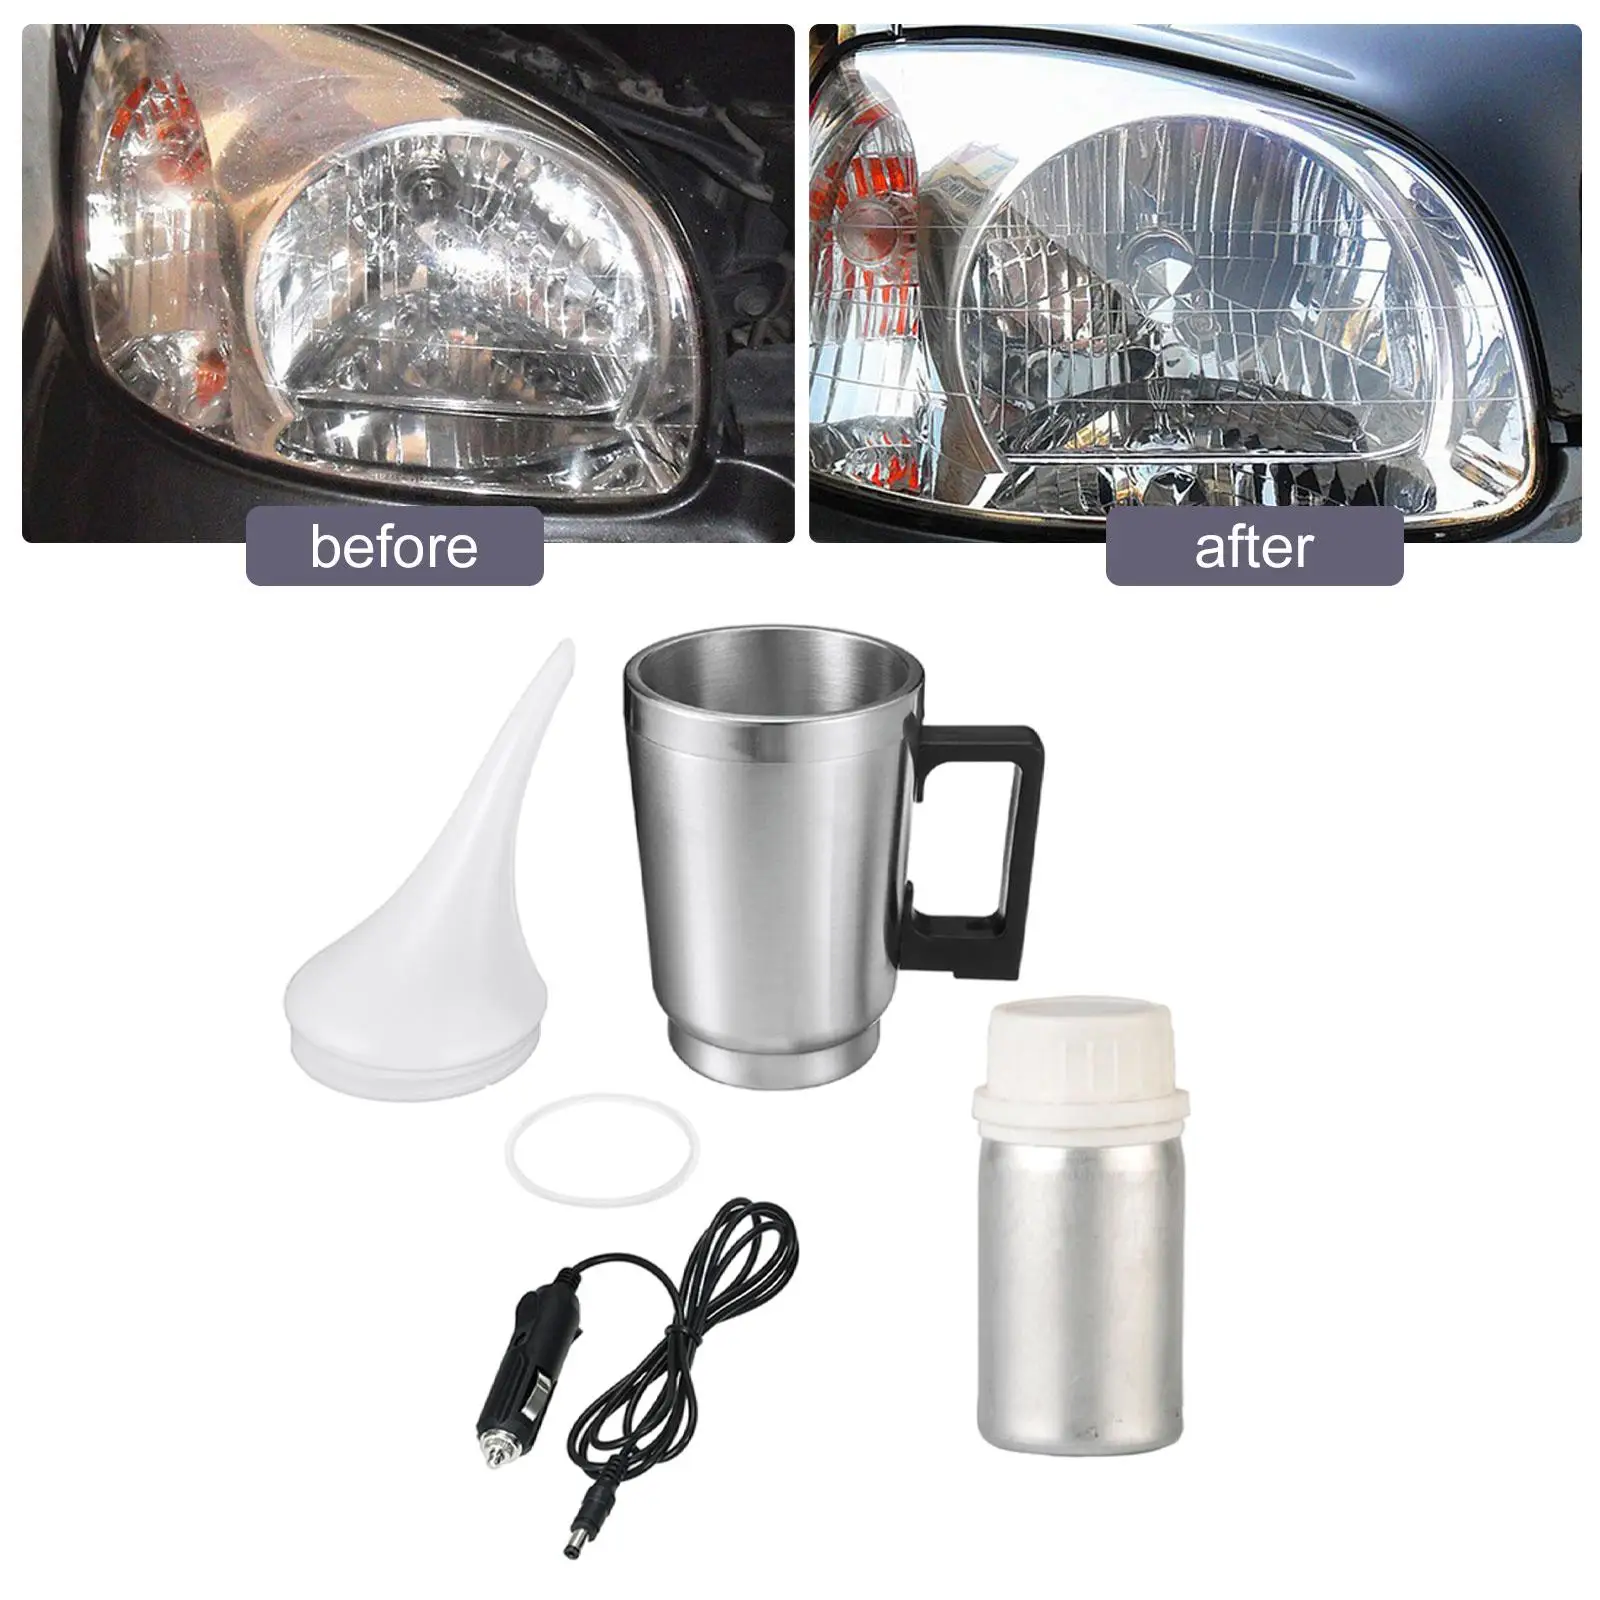 Car Headlight Lens Renovation Kit Atomizing Cup Iron Plated Repair Tool for Taillights Automotive Renovator Fog Lights